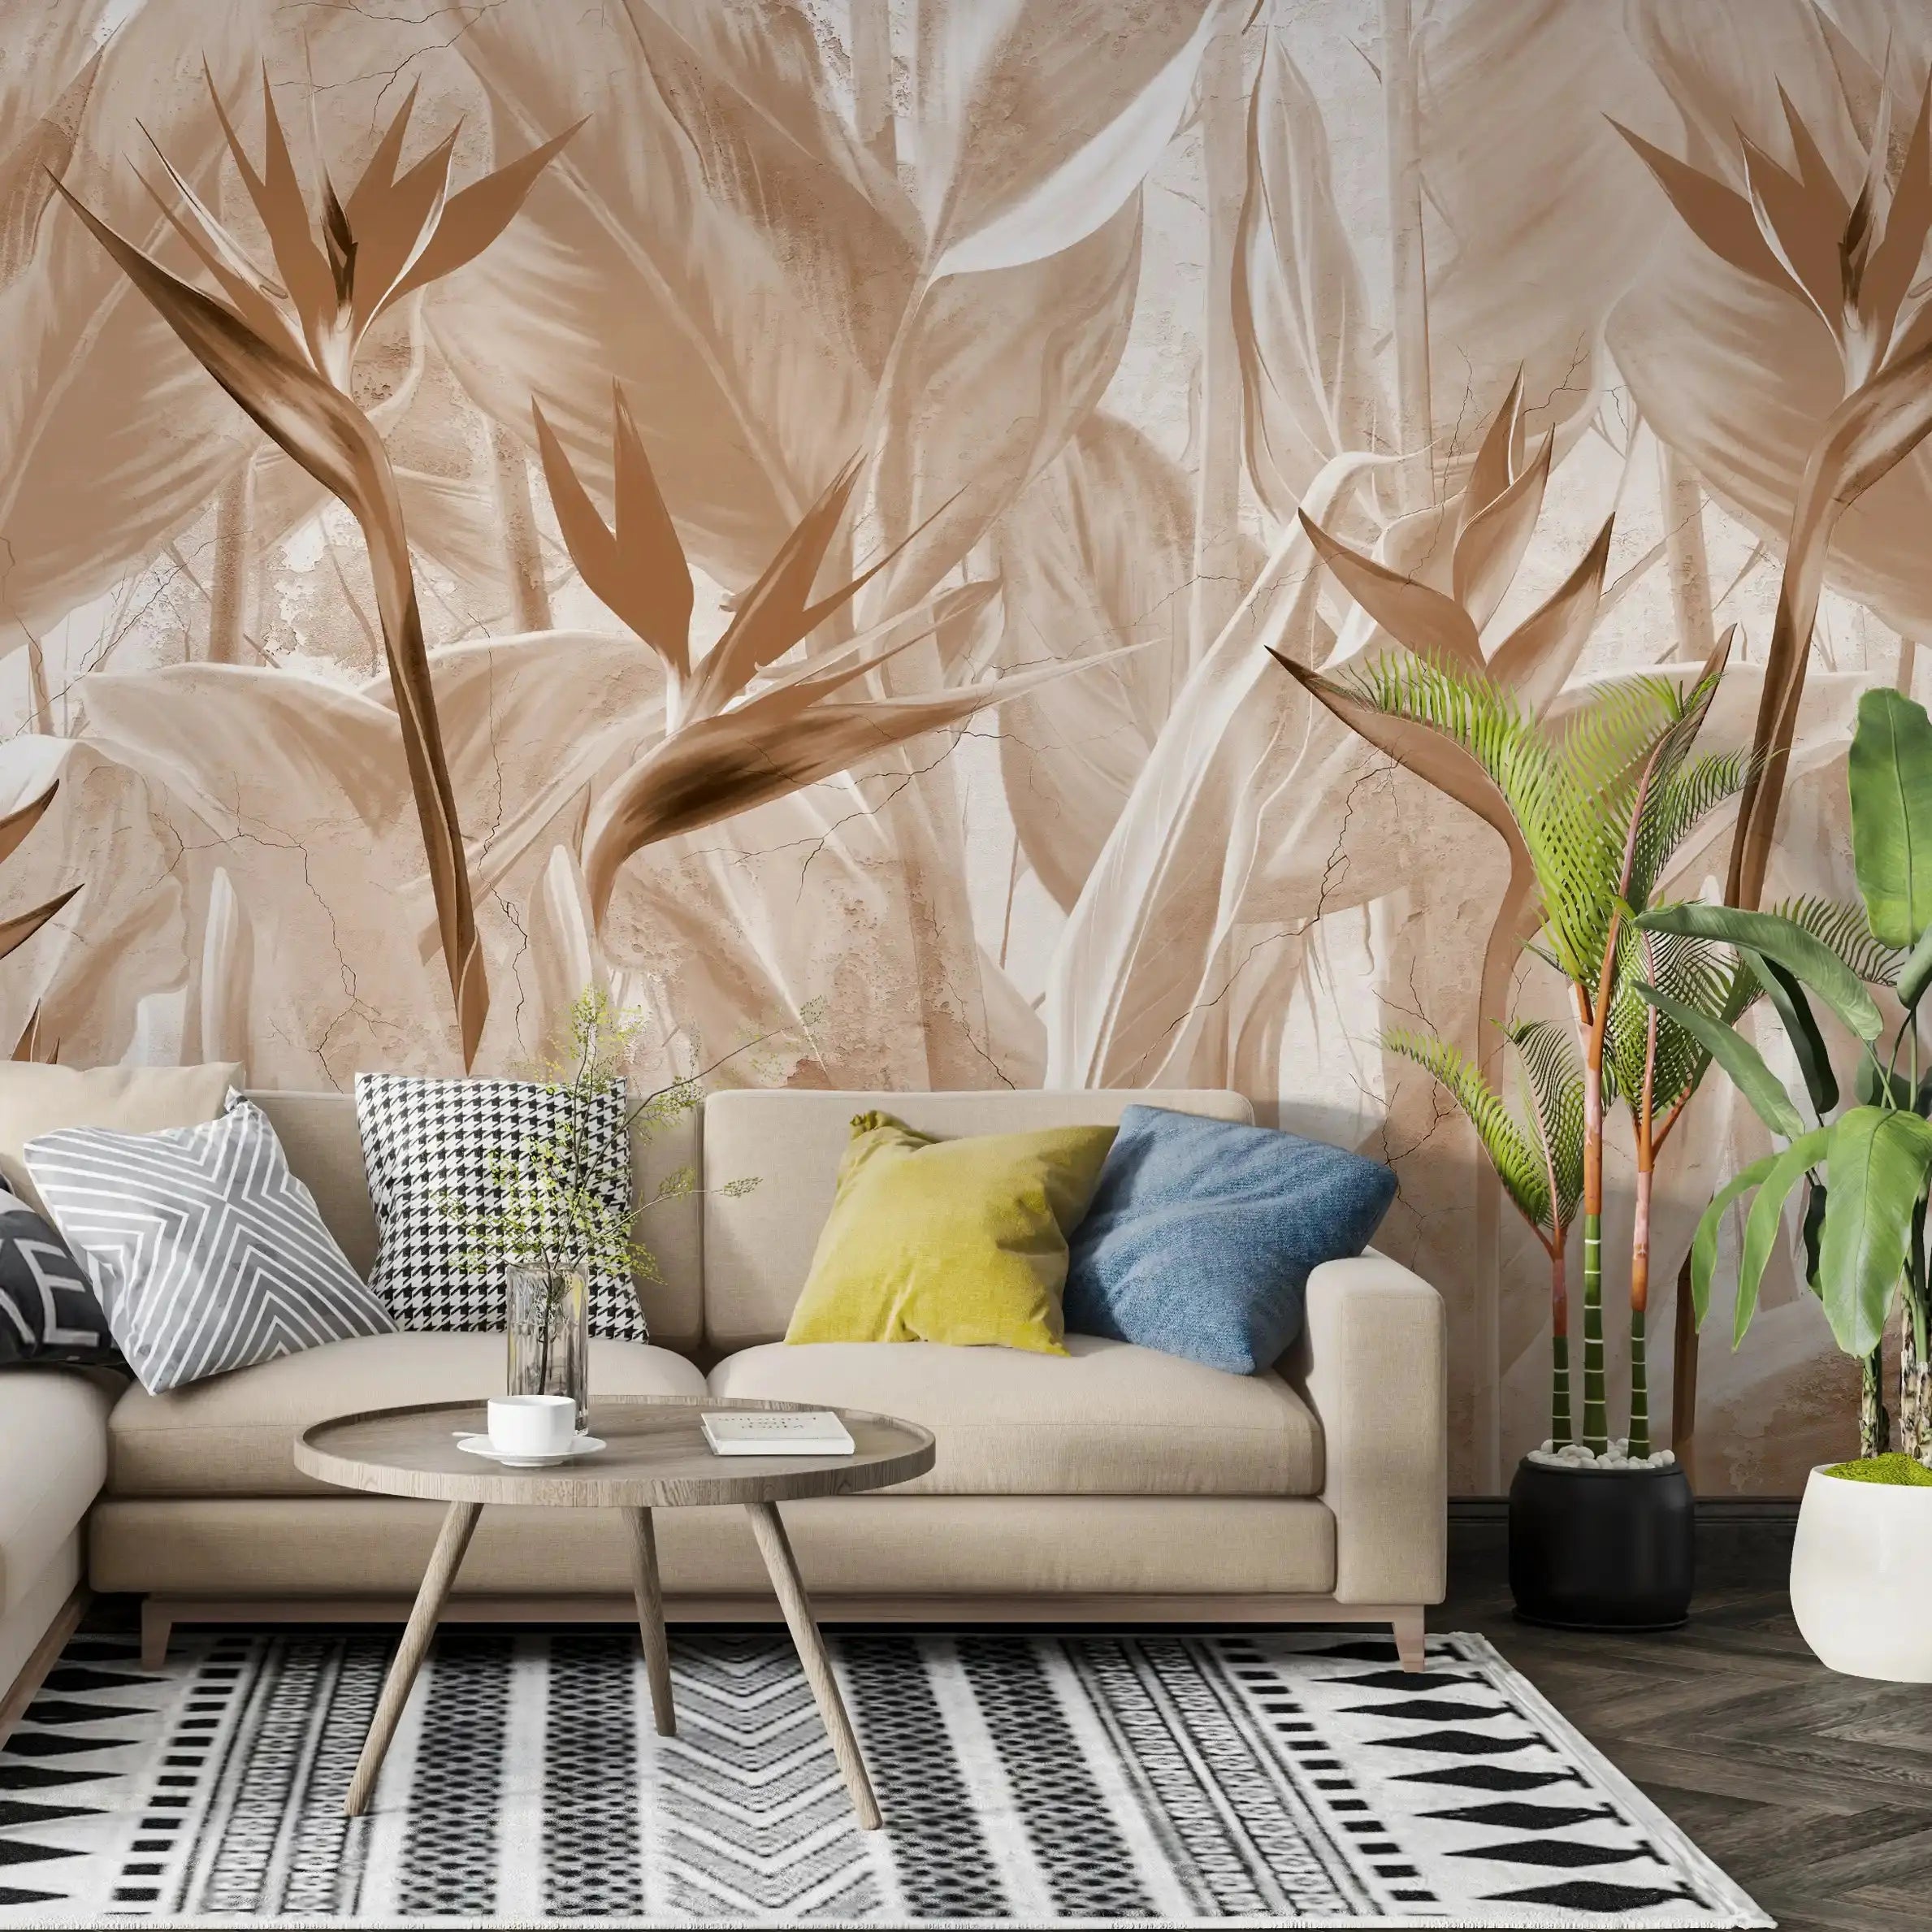 3006-D / Peel and Stick Botanical Wallpaper - Bird of Paradise Design, Easy Install Wall Mural - Artevella